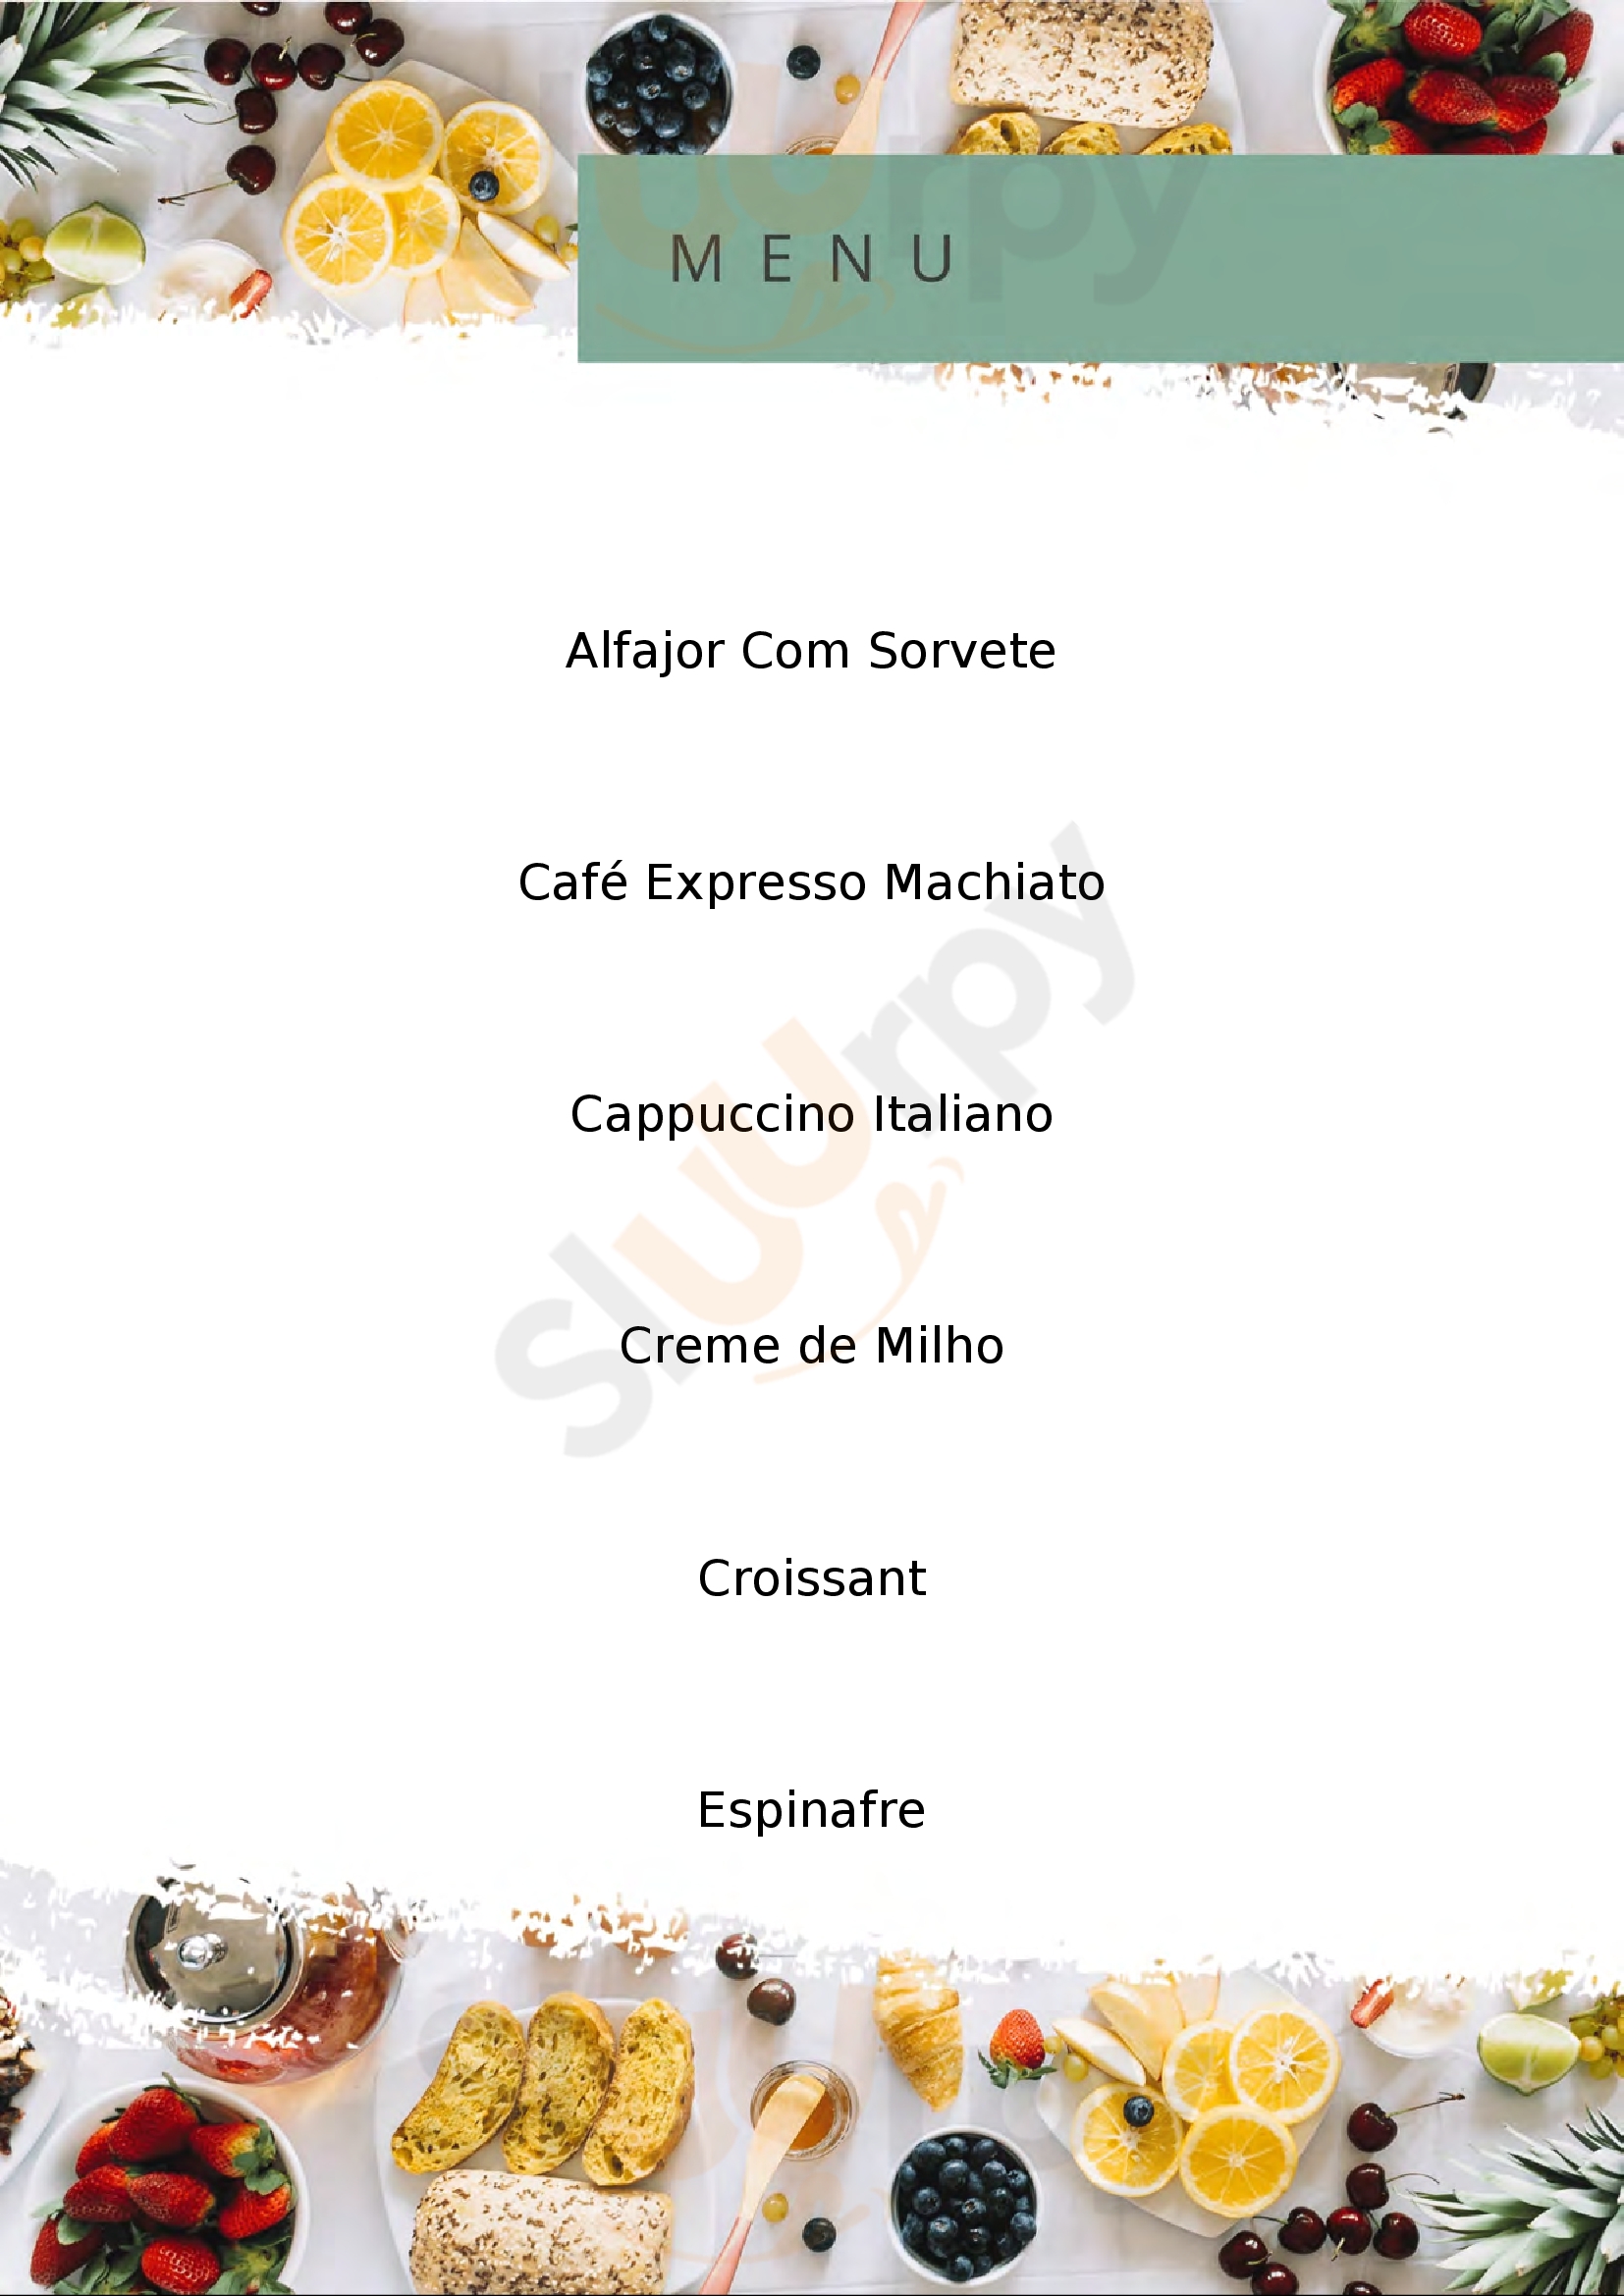 Berinjela Gourmet Sandwich Florianópolis Menu - 1